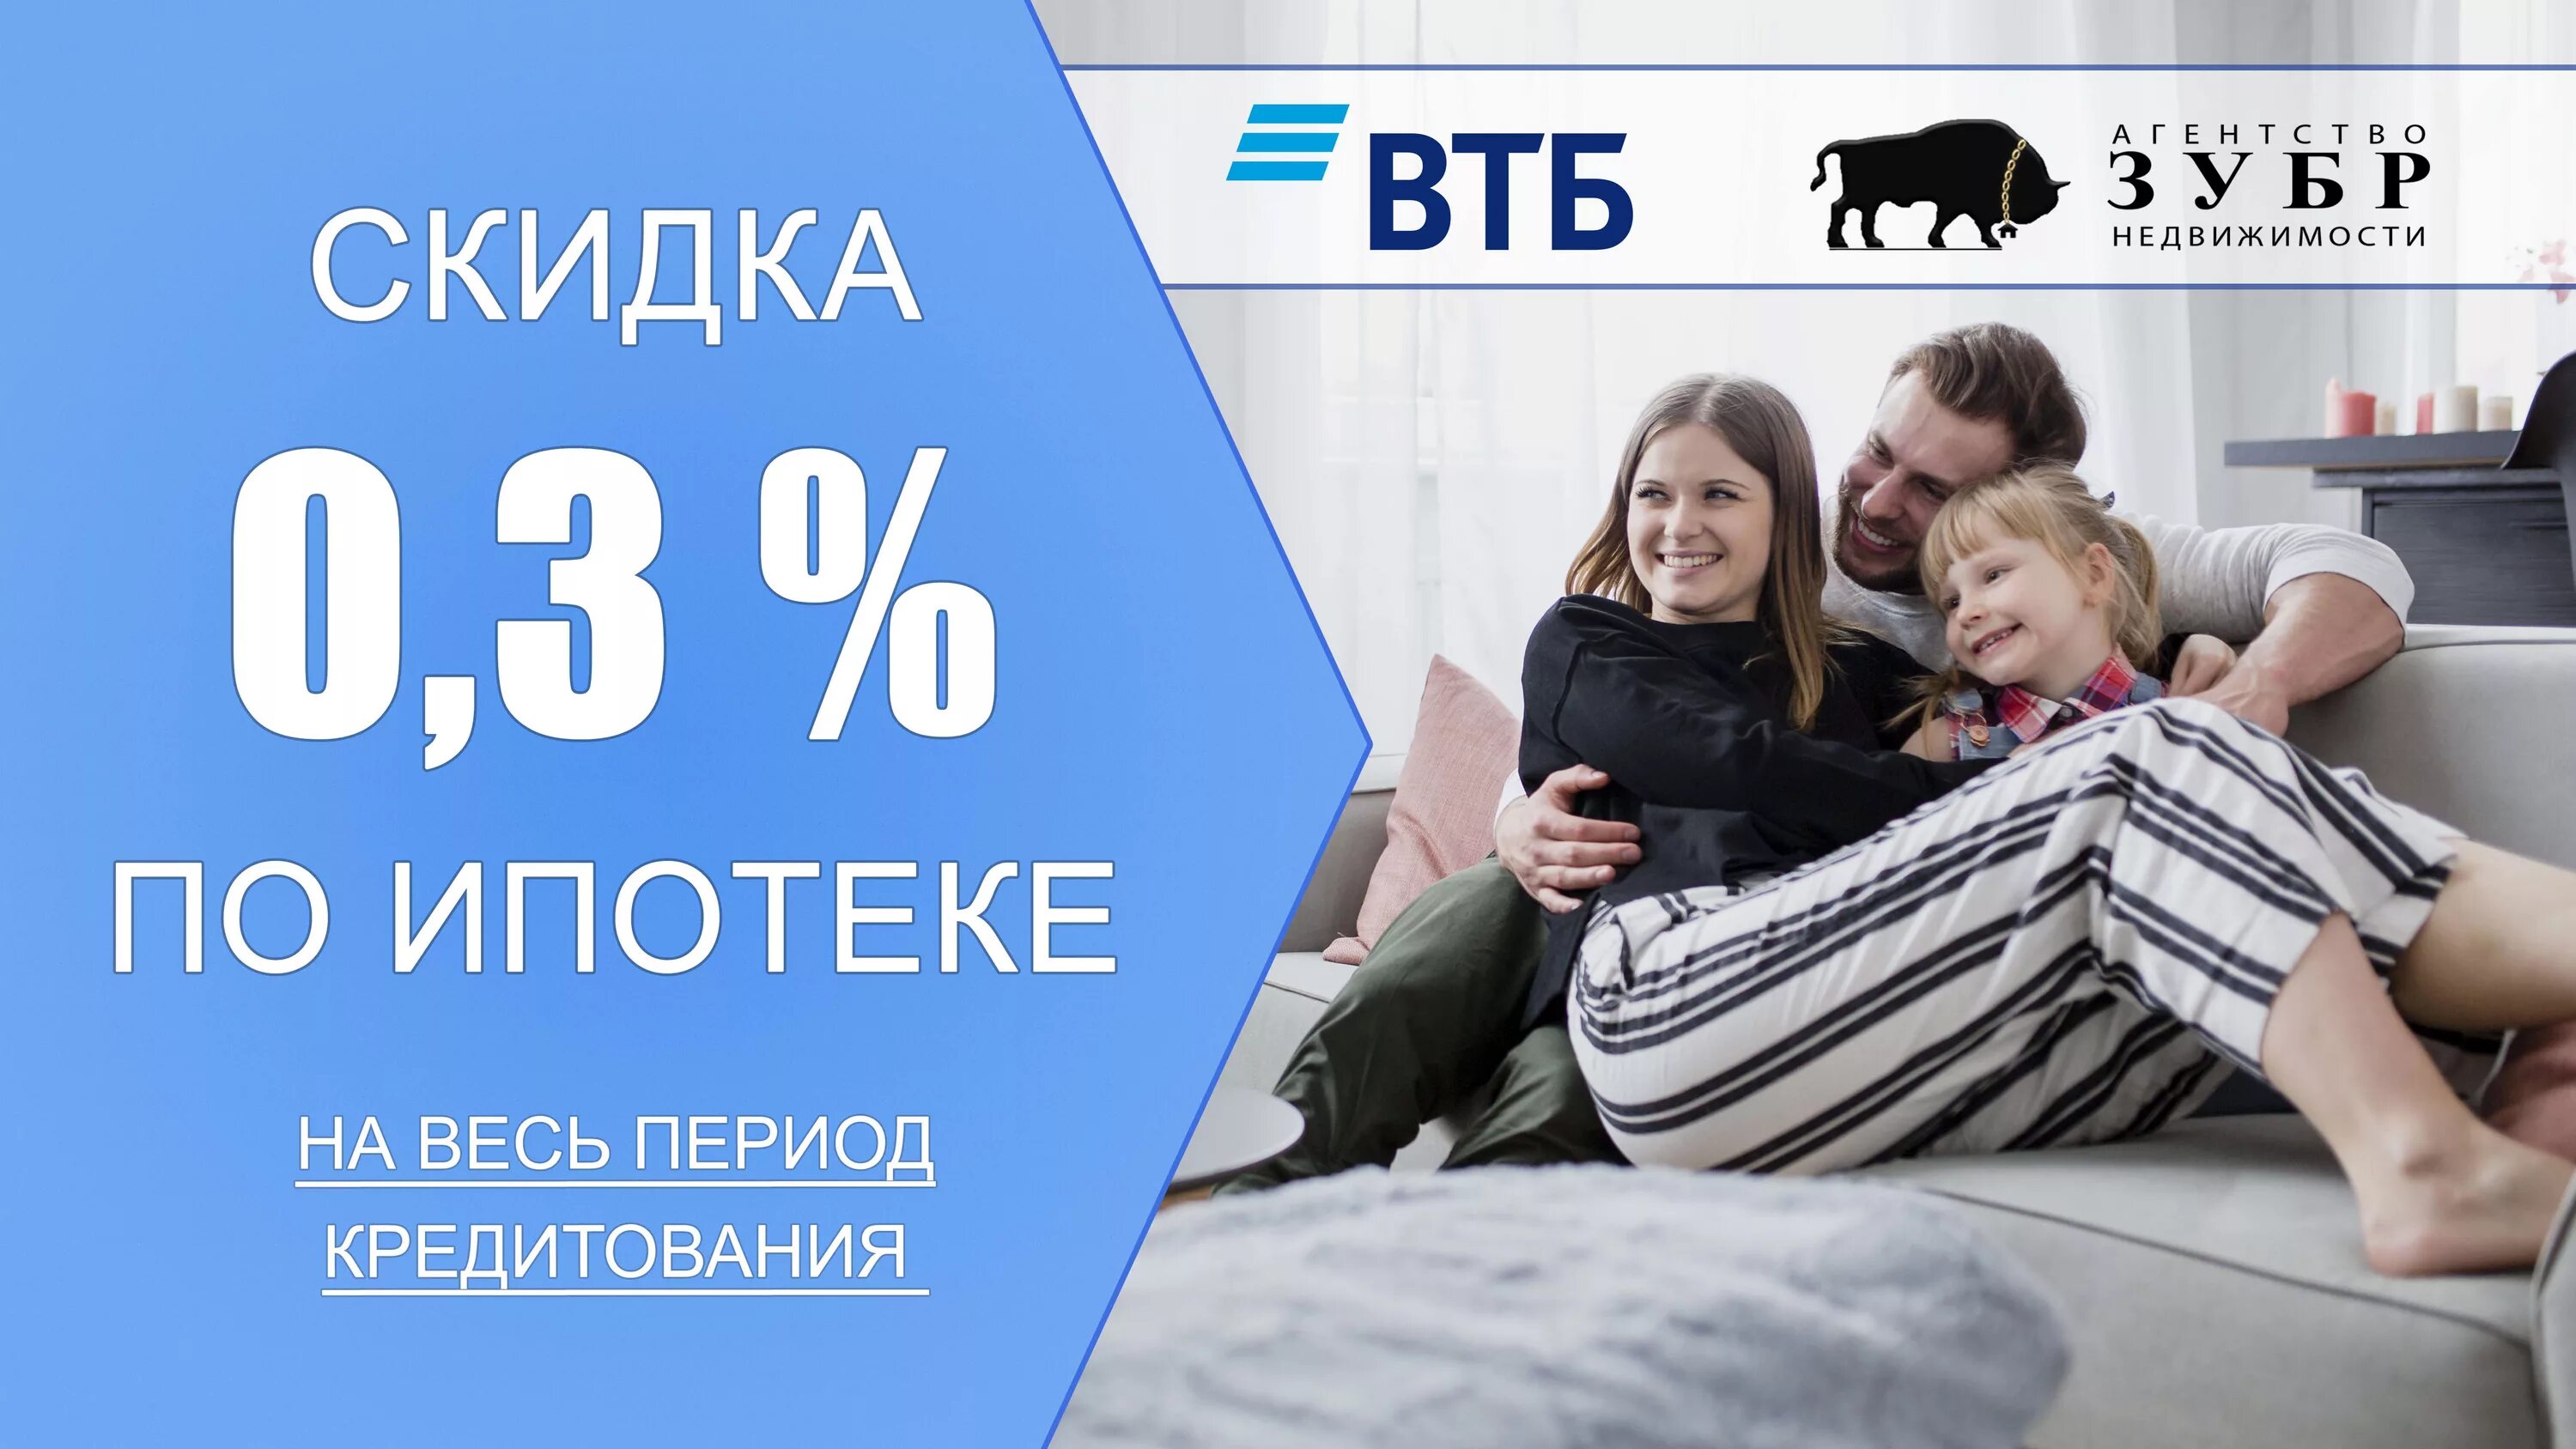 Ипотека в москве под 0.1 процент условия. Скидка по ипотеке. ВТБ скидка. Ипотека от 0,1%. Ипотека ВТБ ставки.